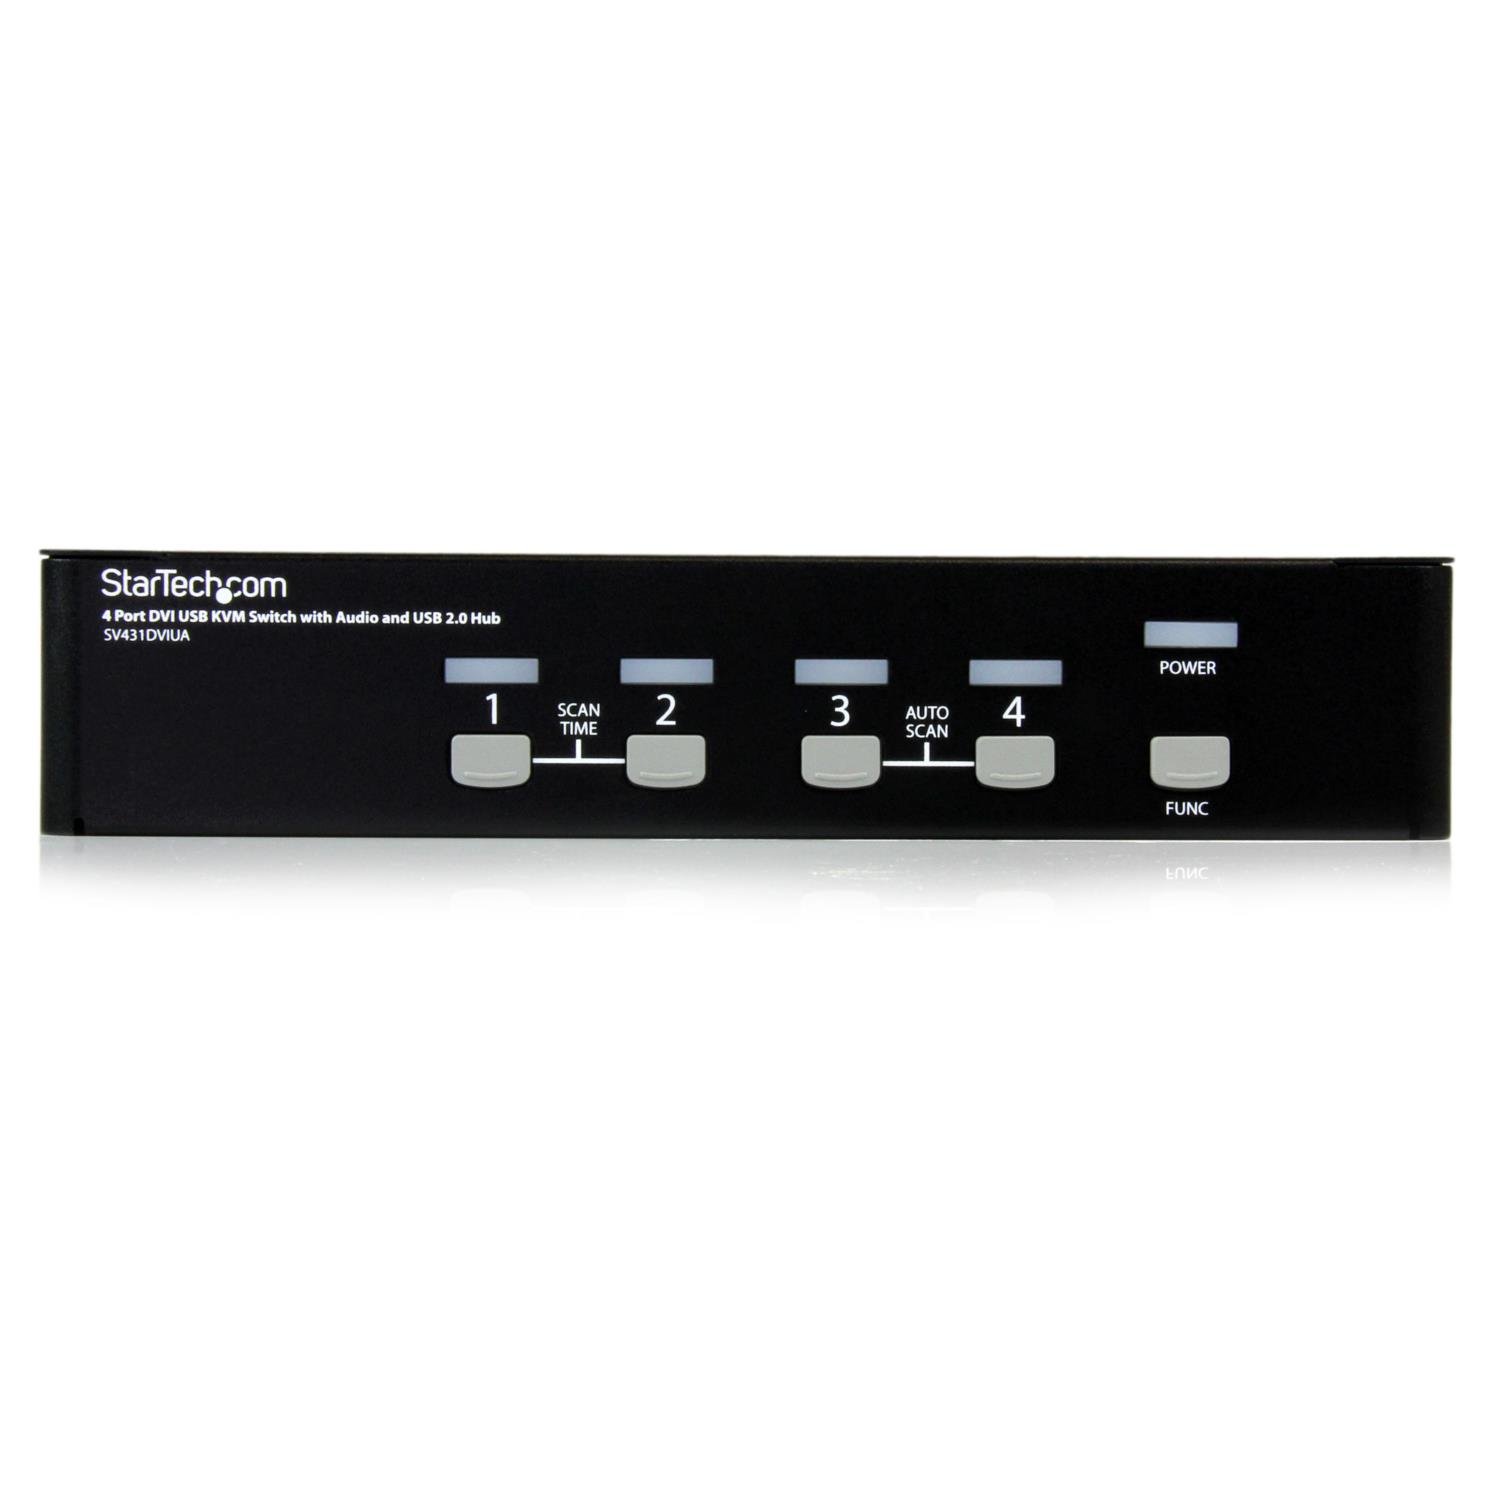 StarTech.com 4-Port KVM Switch for DVI Computers - 1U Rack-Mount KVM Switch with Audio - DVI KVM switch -2 port - 1U (SV431DVIUA)